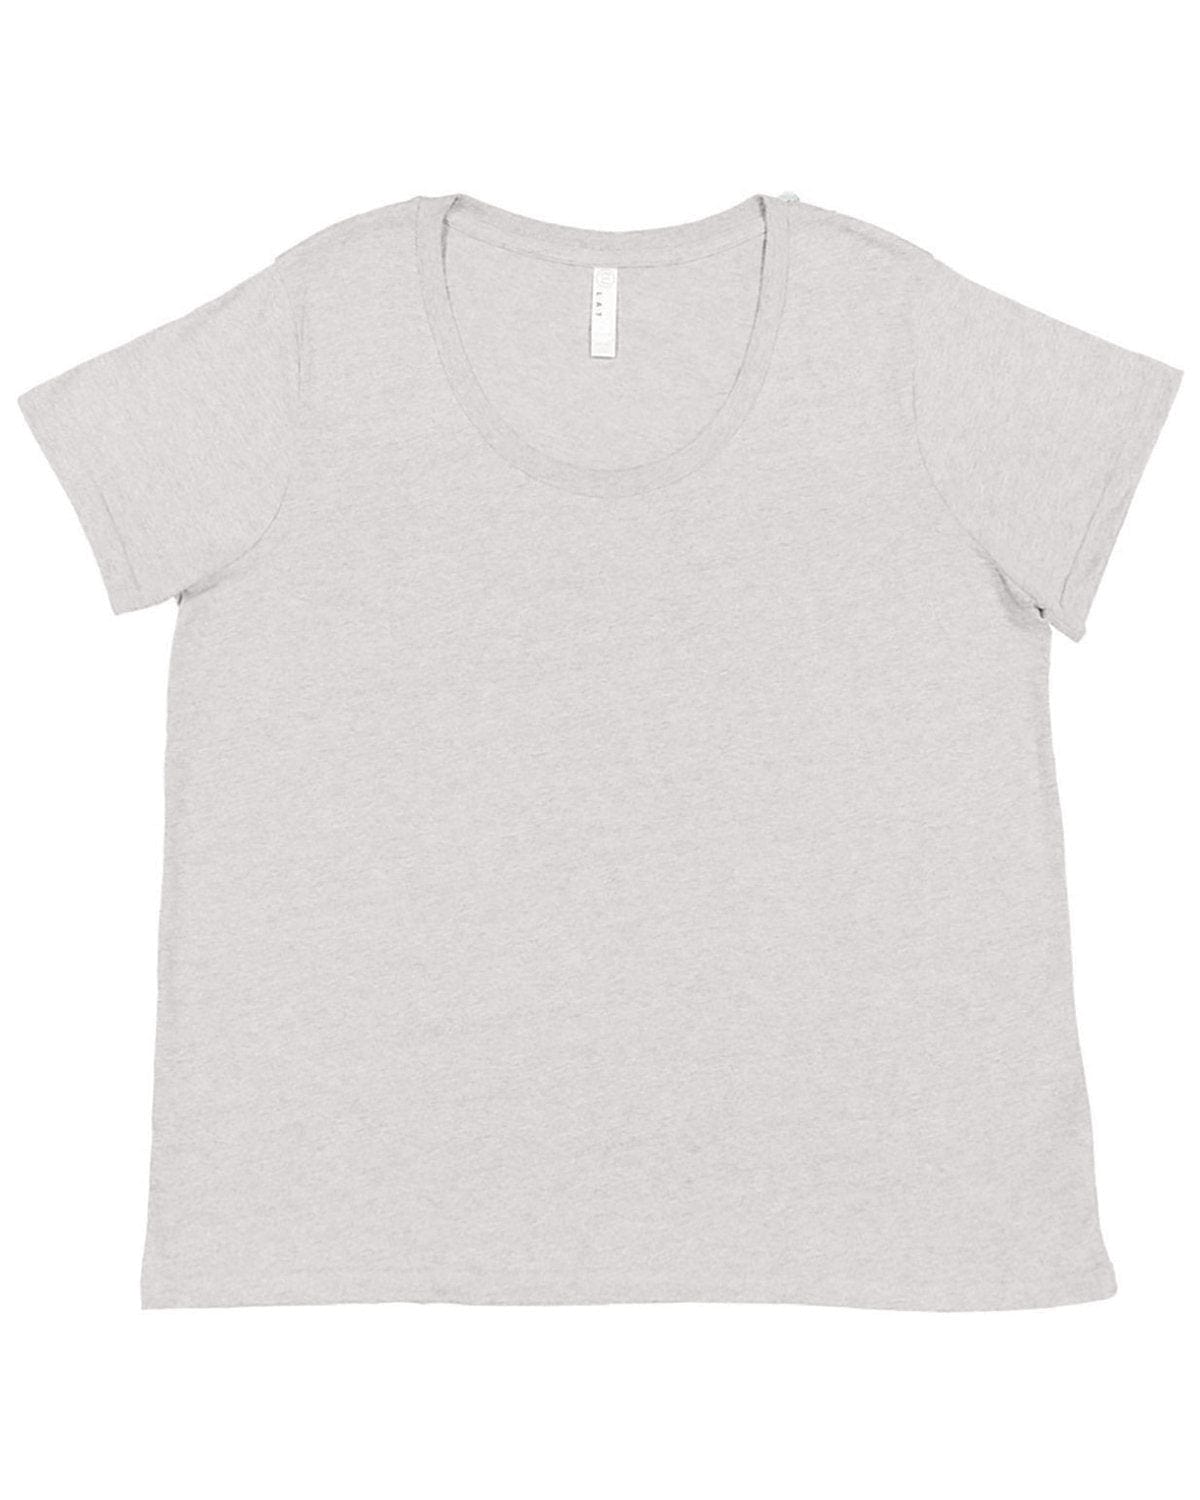 LAT 3816: Ladies' Curvy Fine Jersey T-Shirt